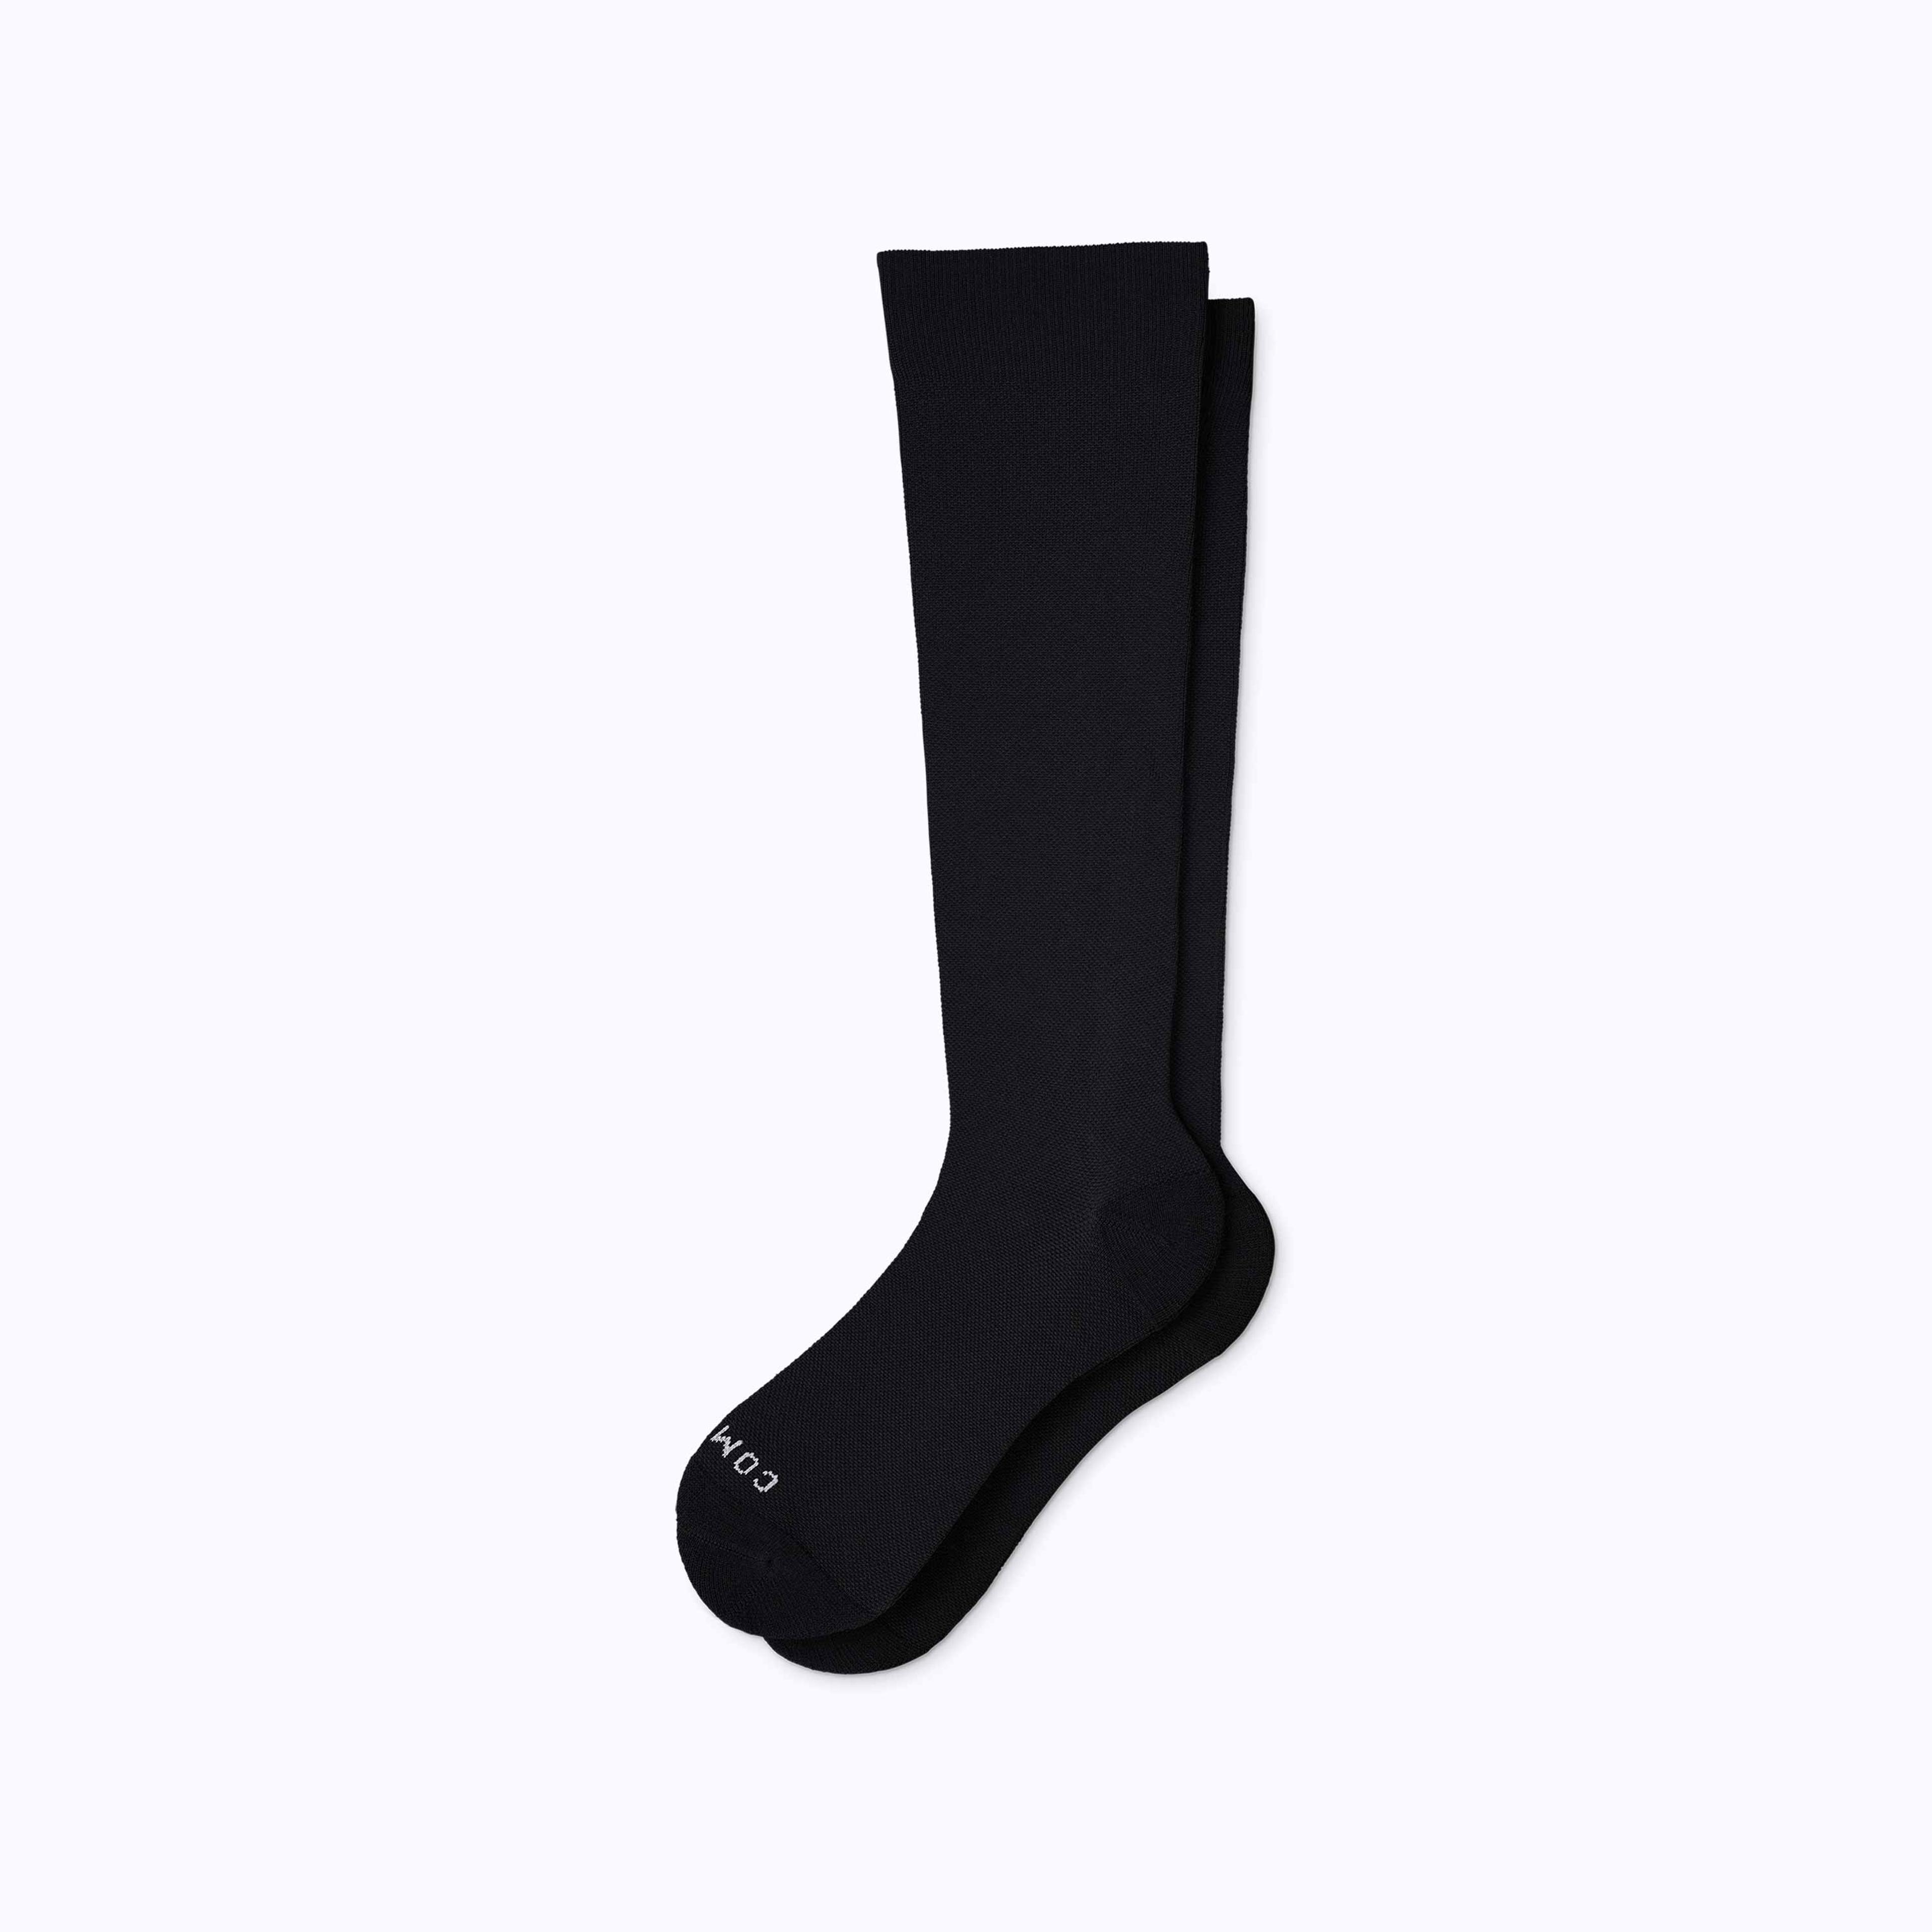 Knee-High Compression Socks | Comrad Socks | Solid